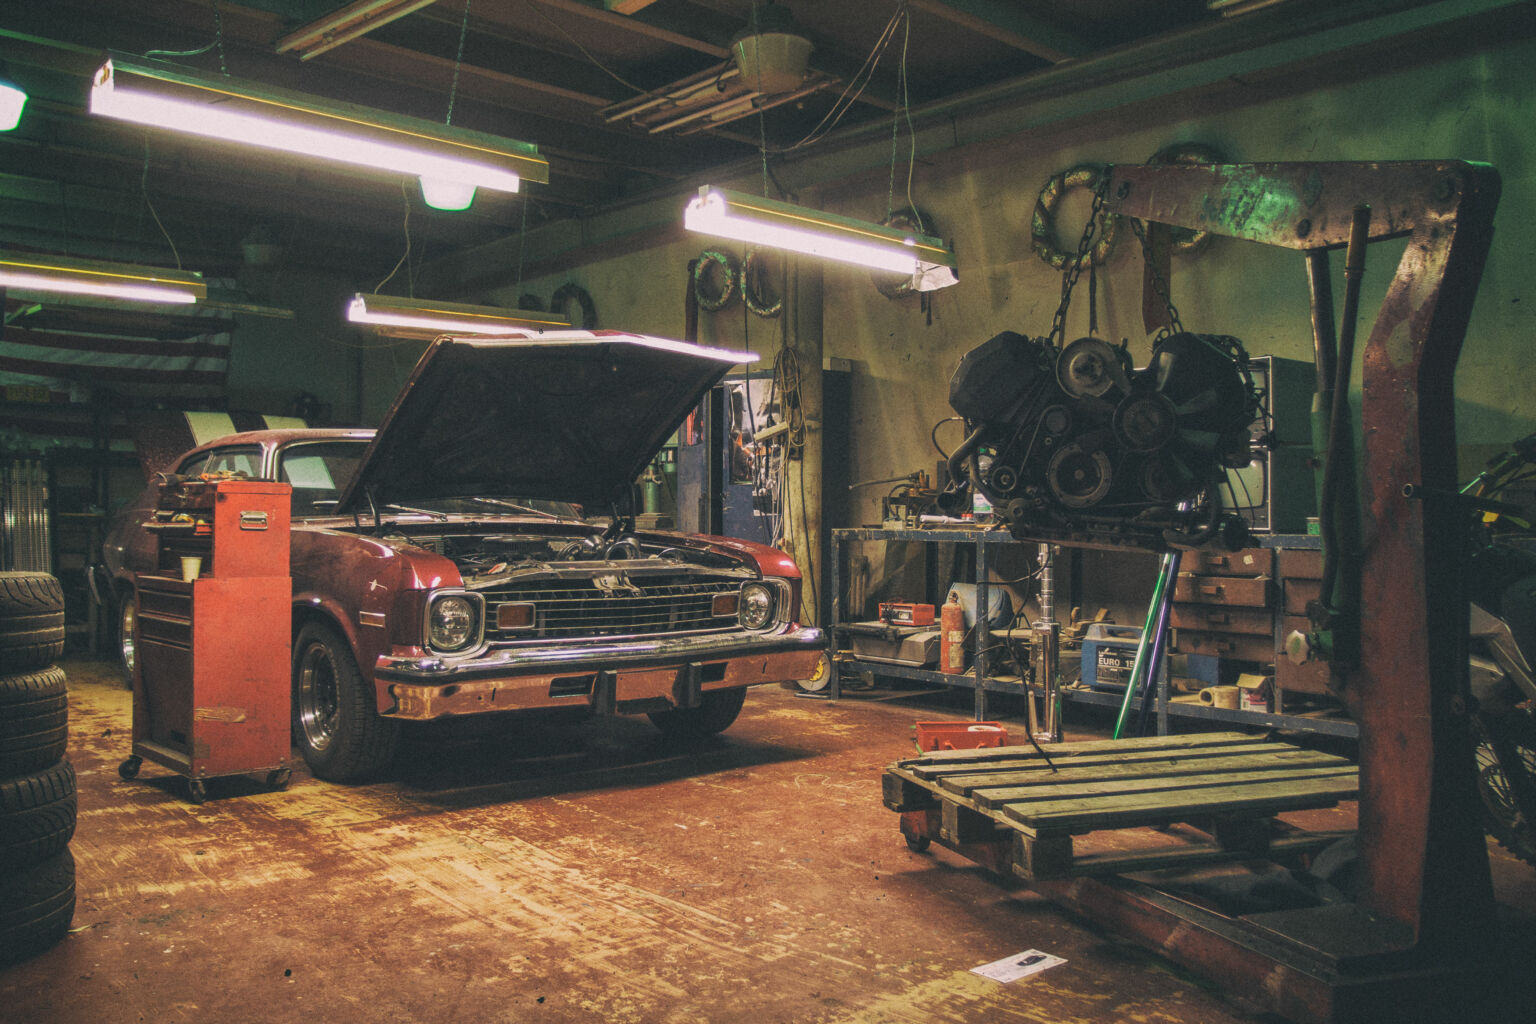 Car repair shop | Copyright-free photo (by M. Vorel) | LibreShot